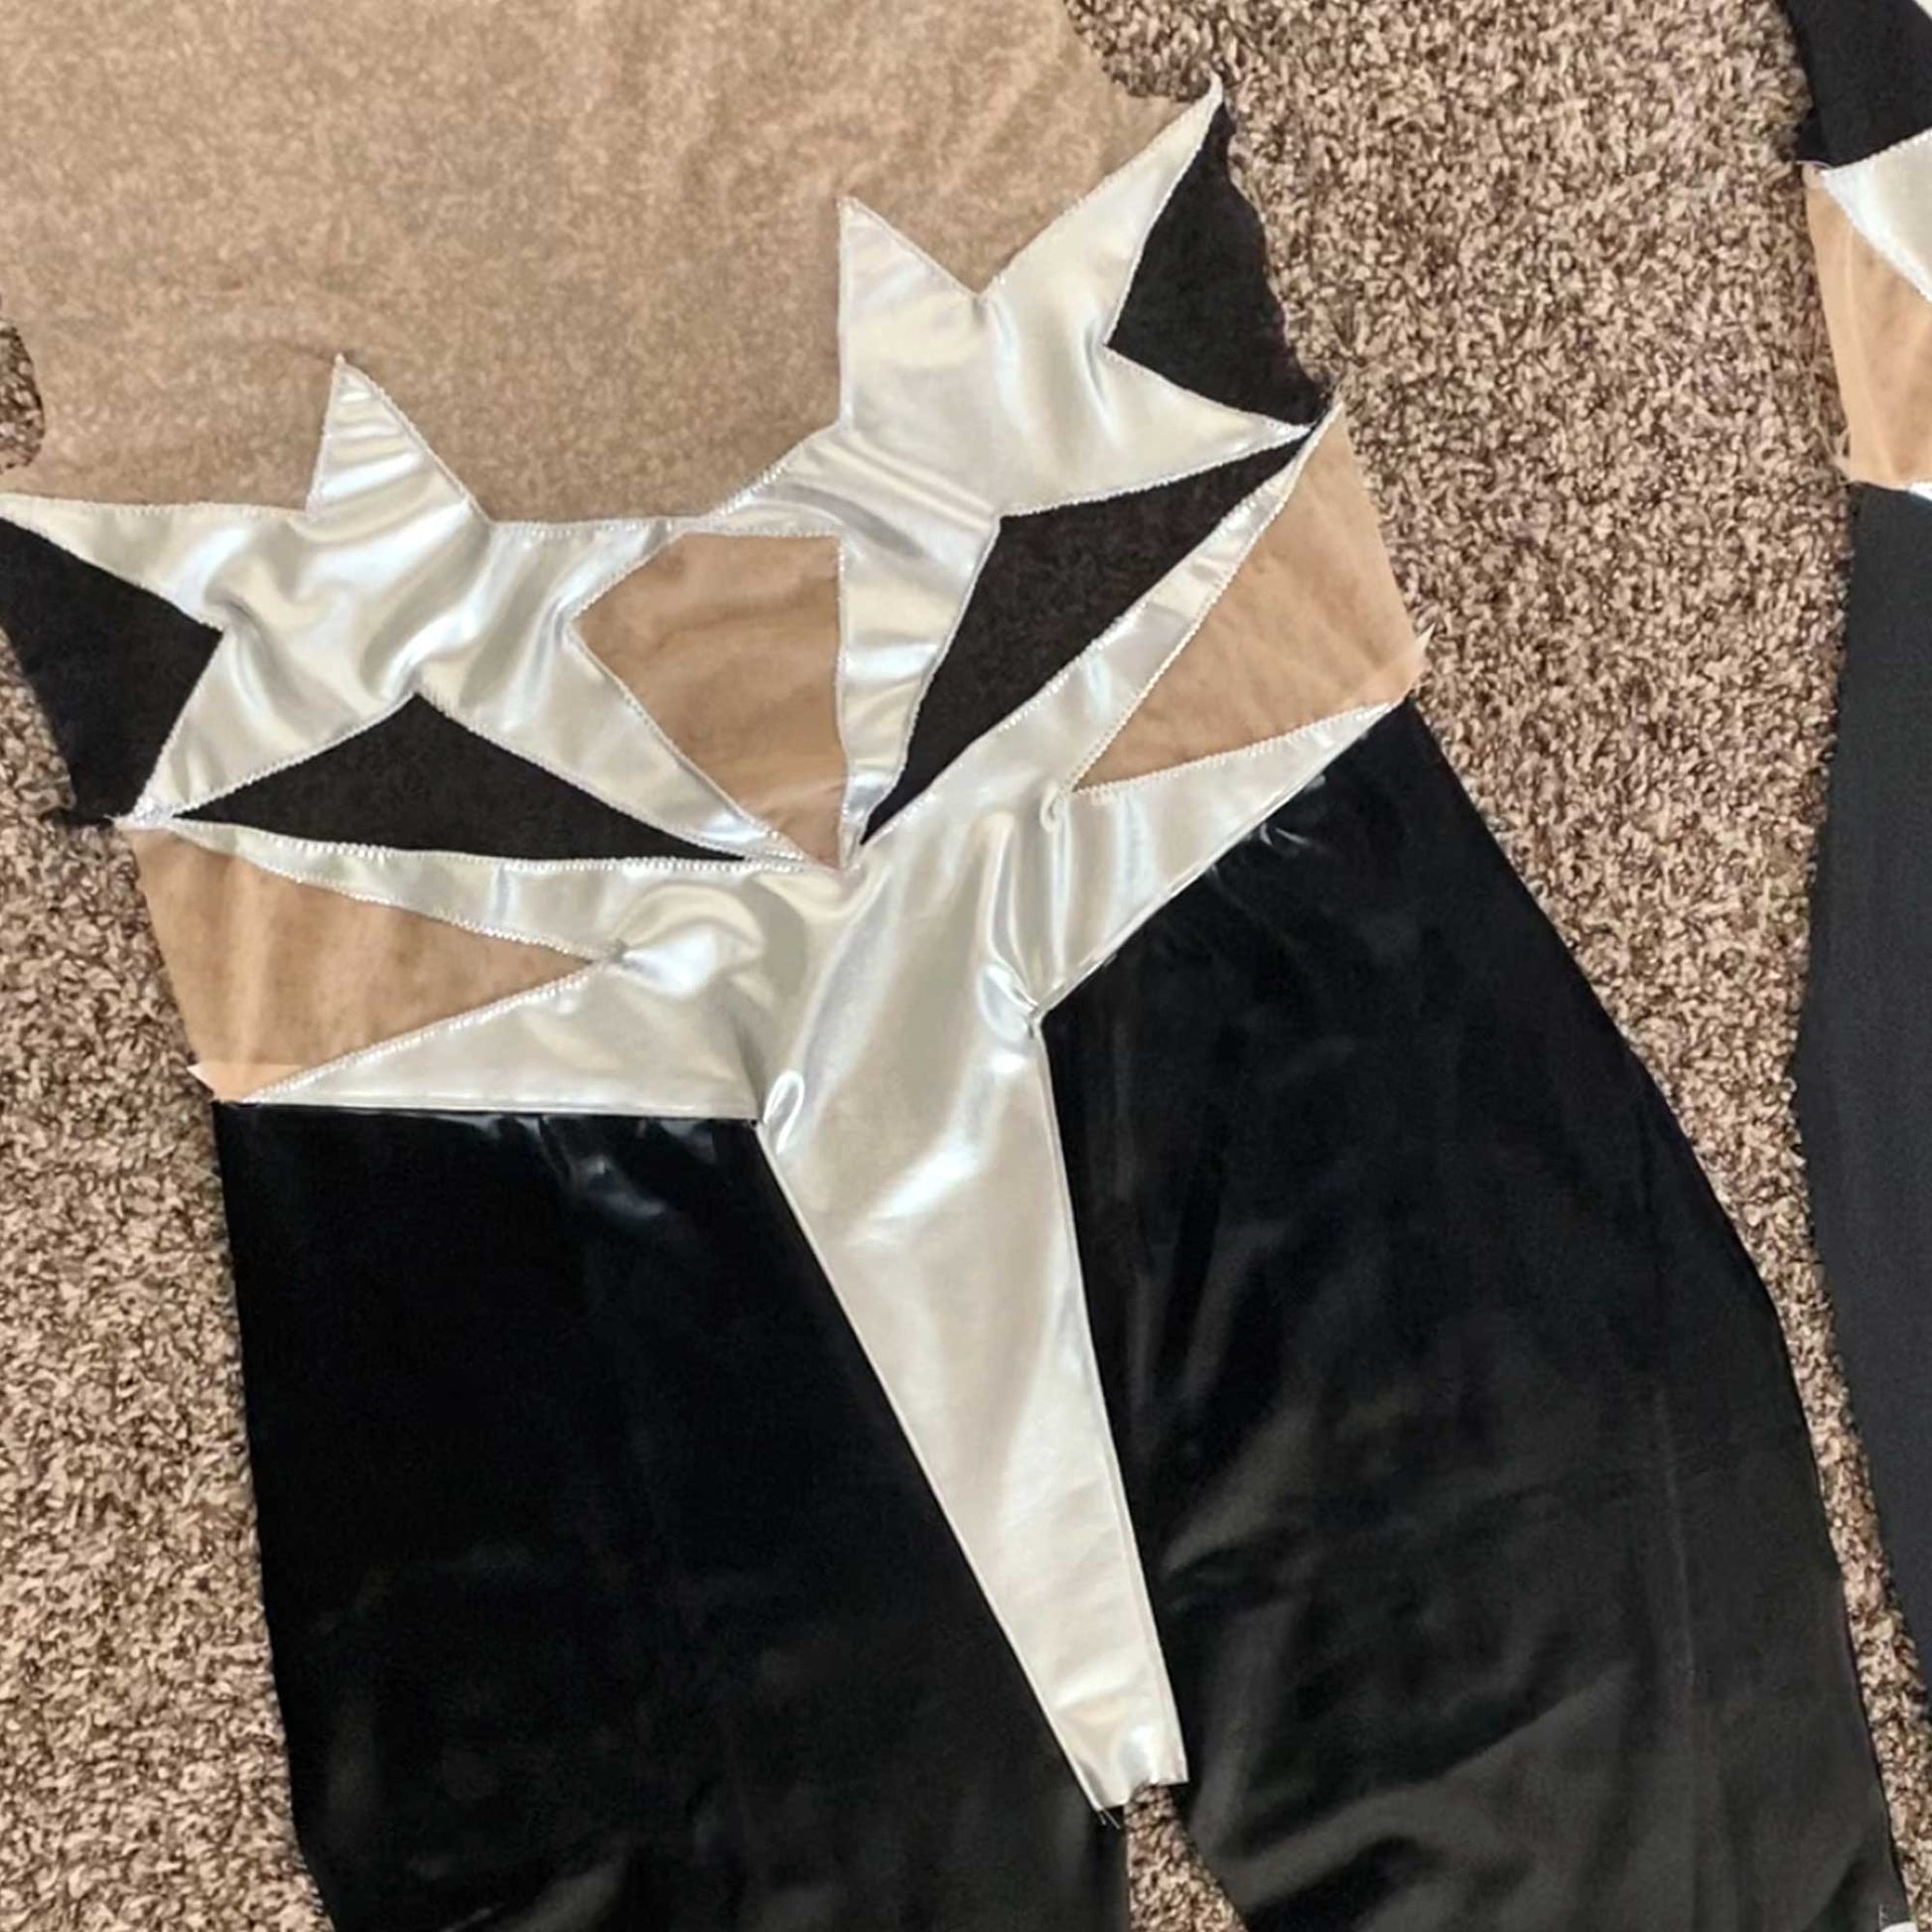 katkow drag queen star bodysuit sewing pattern photo